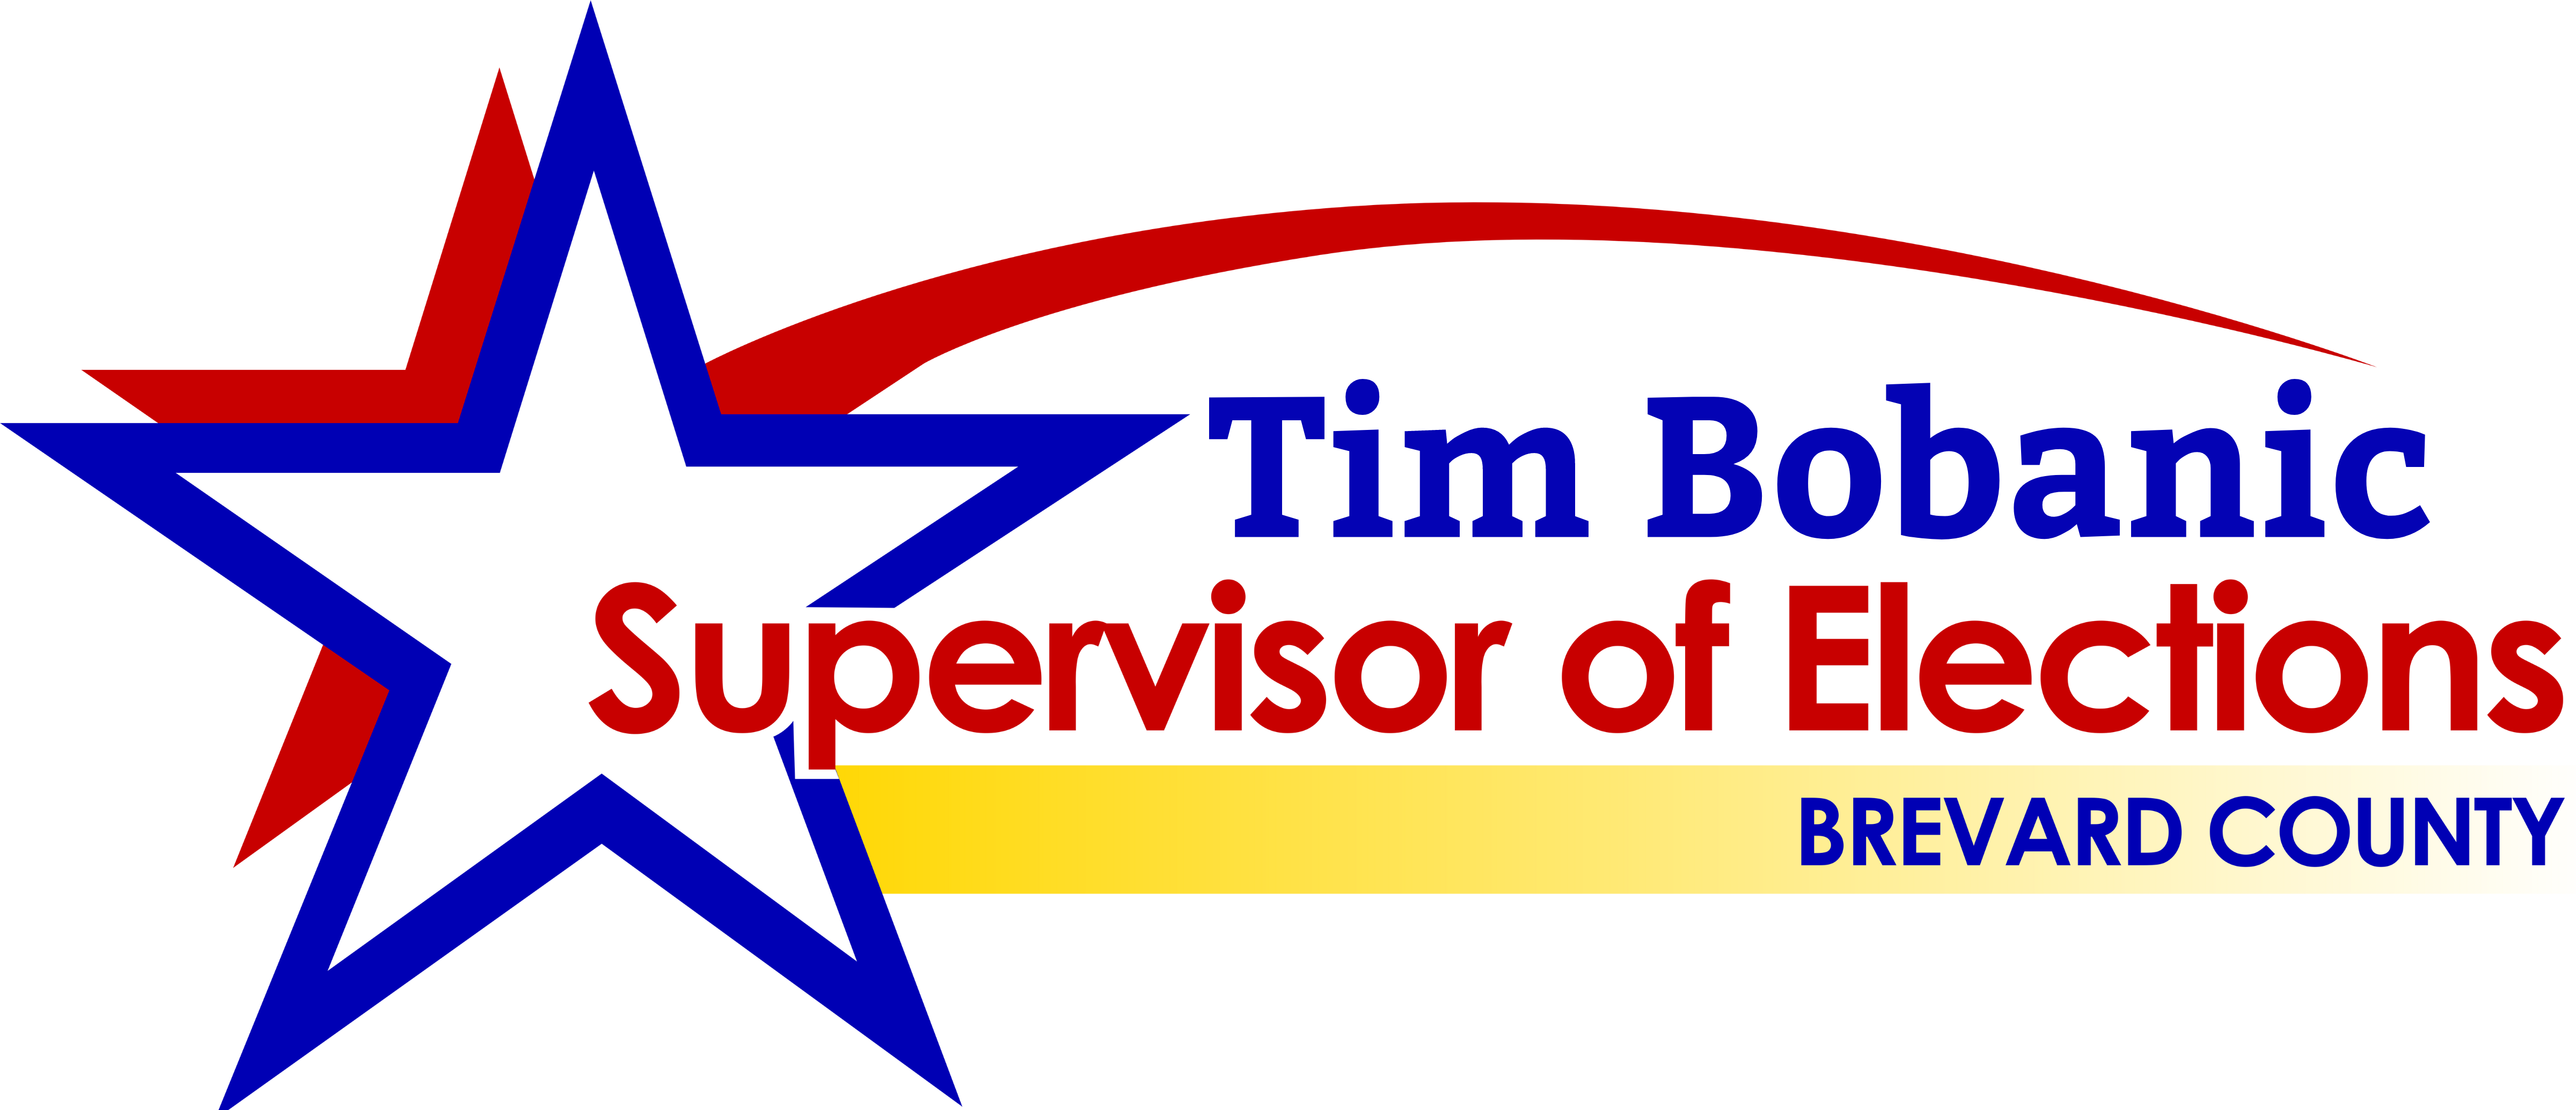 Tim Bobanic, Supervisor of Elections, Brevard County